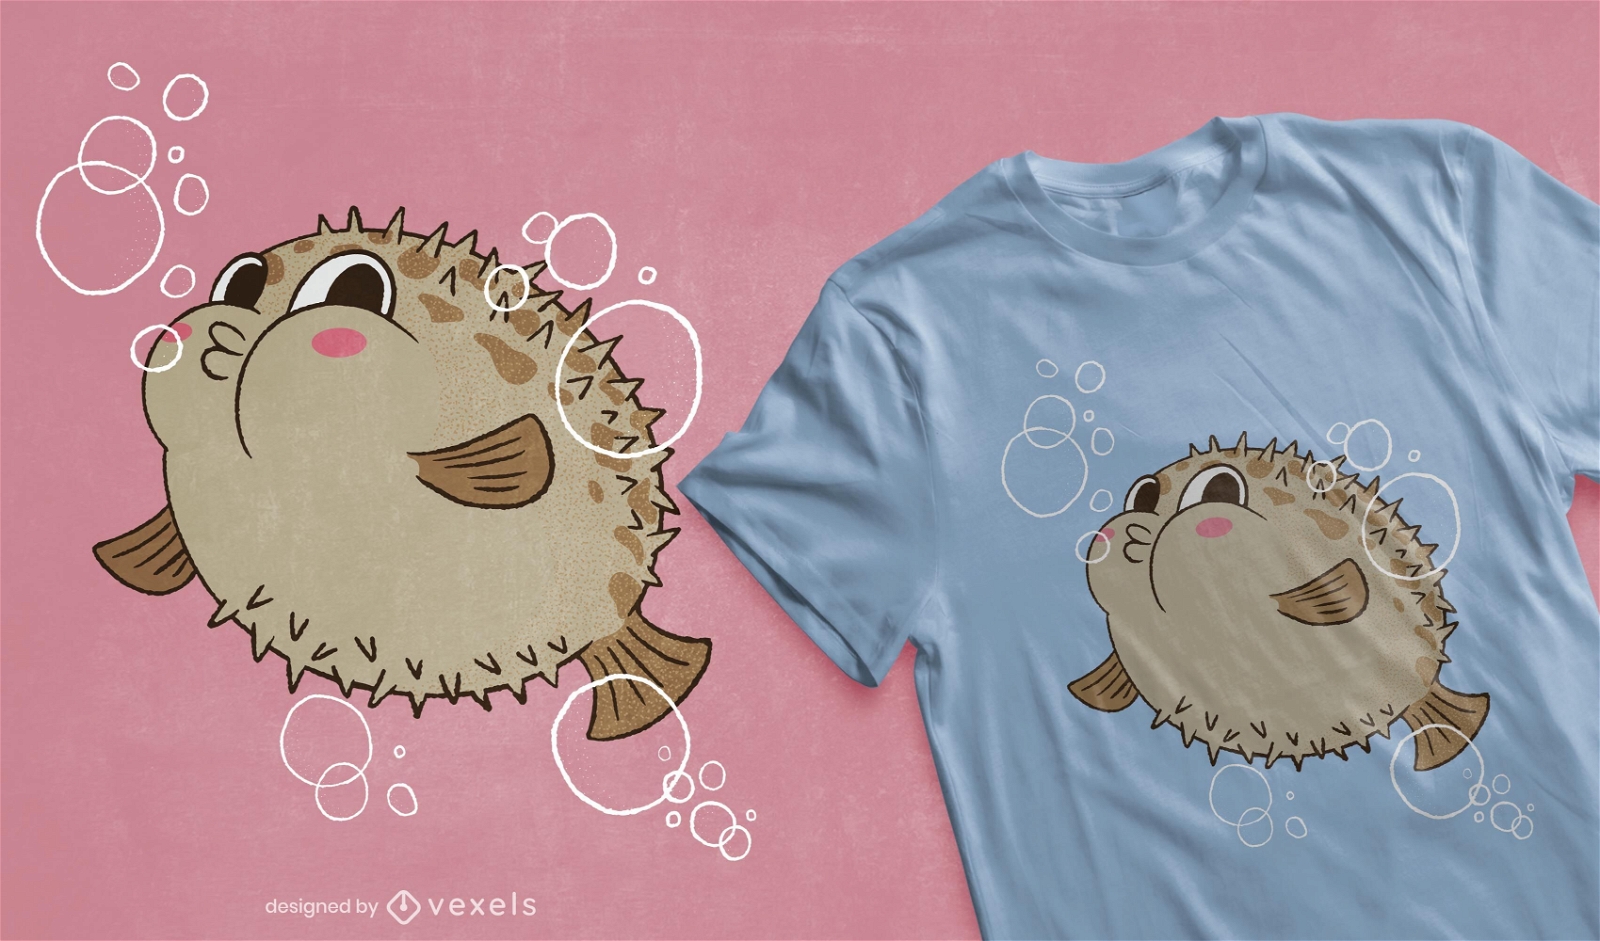 Cute blowfish t-shirt design